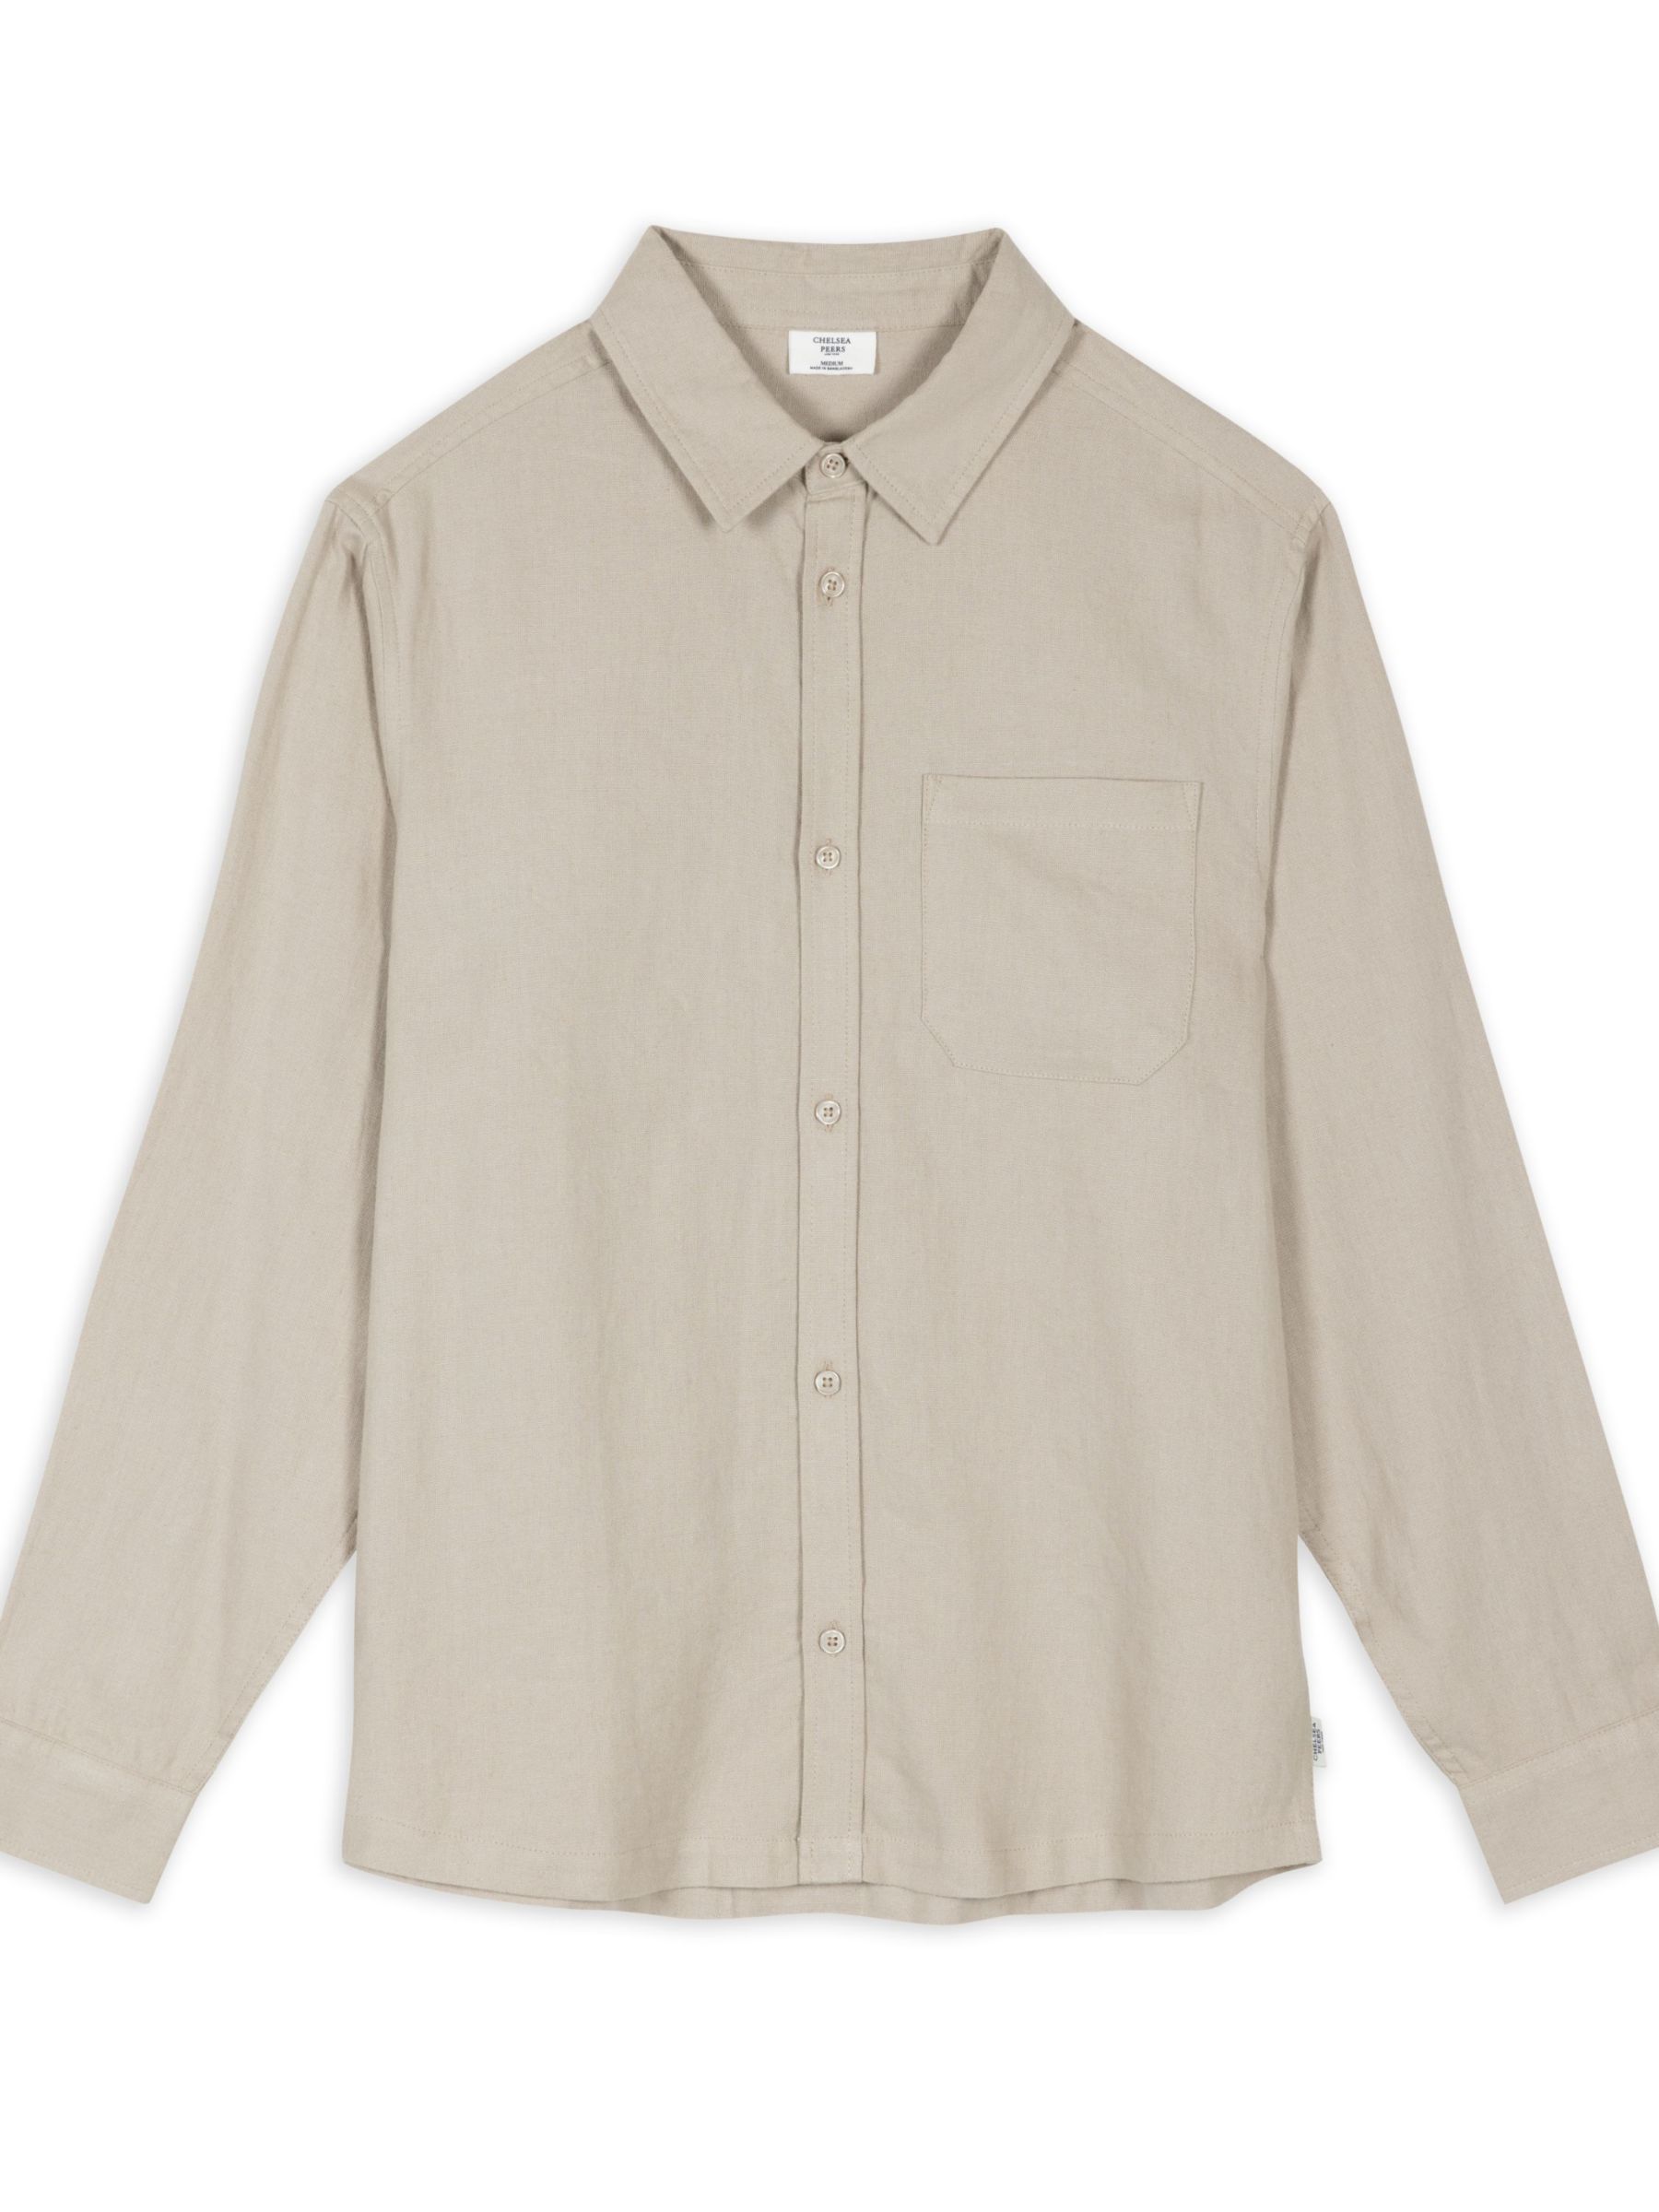 Chelsea Peers Linen Blend Long Sleeve Shirt, Camel, S